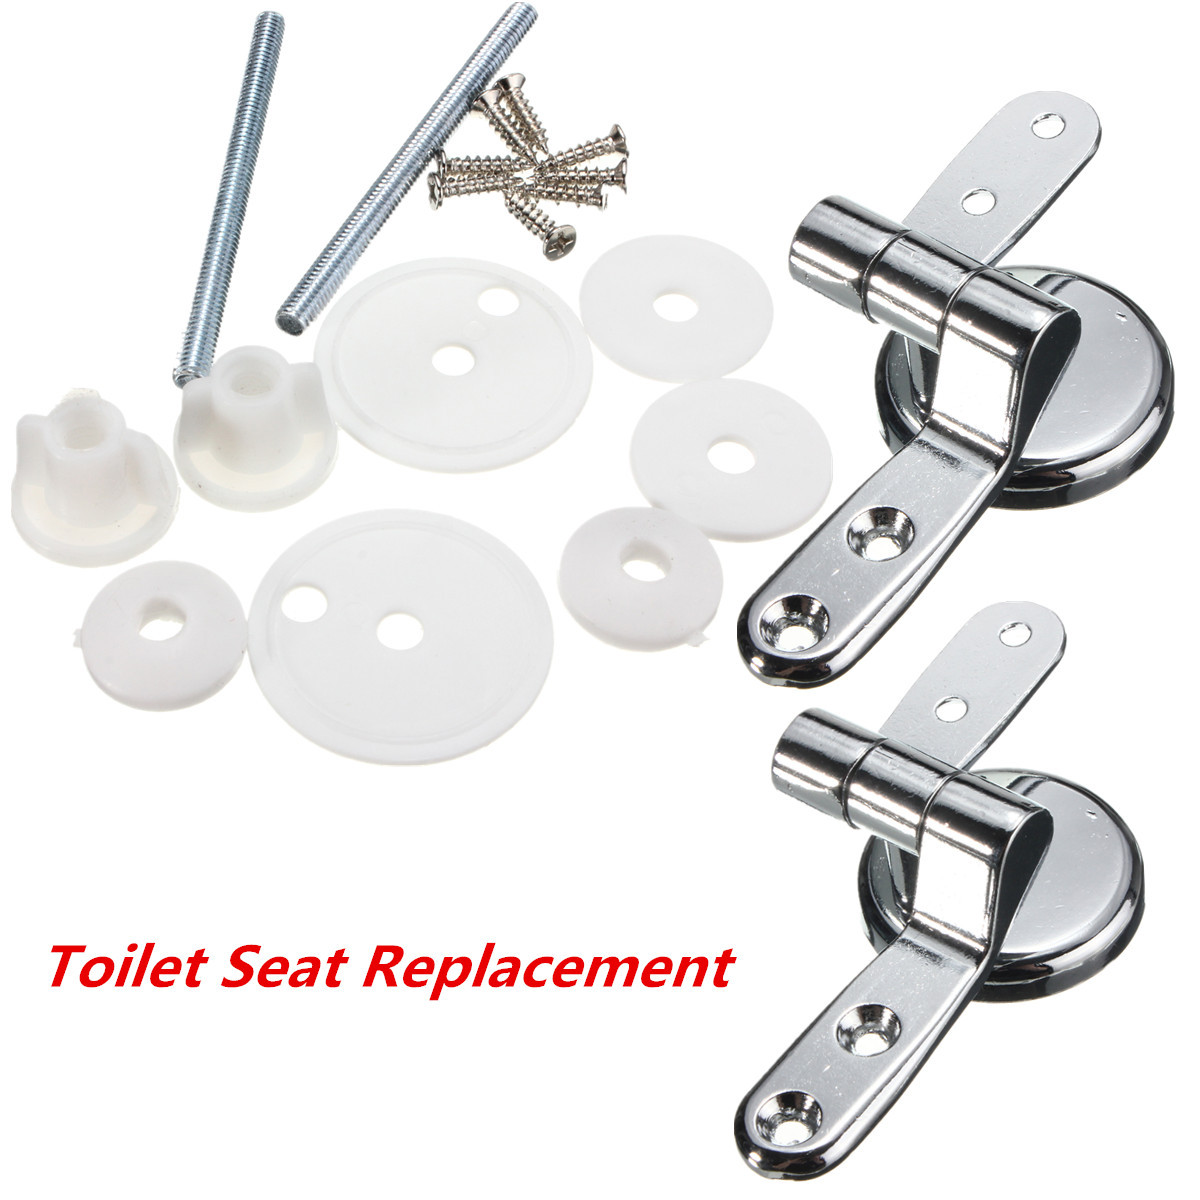 Zinc-Alloy-Universal-Toilet-Seat-Fitting-Replacement-Repair-Chrome-Hinge-Kit-1040226